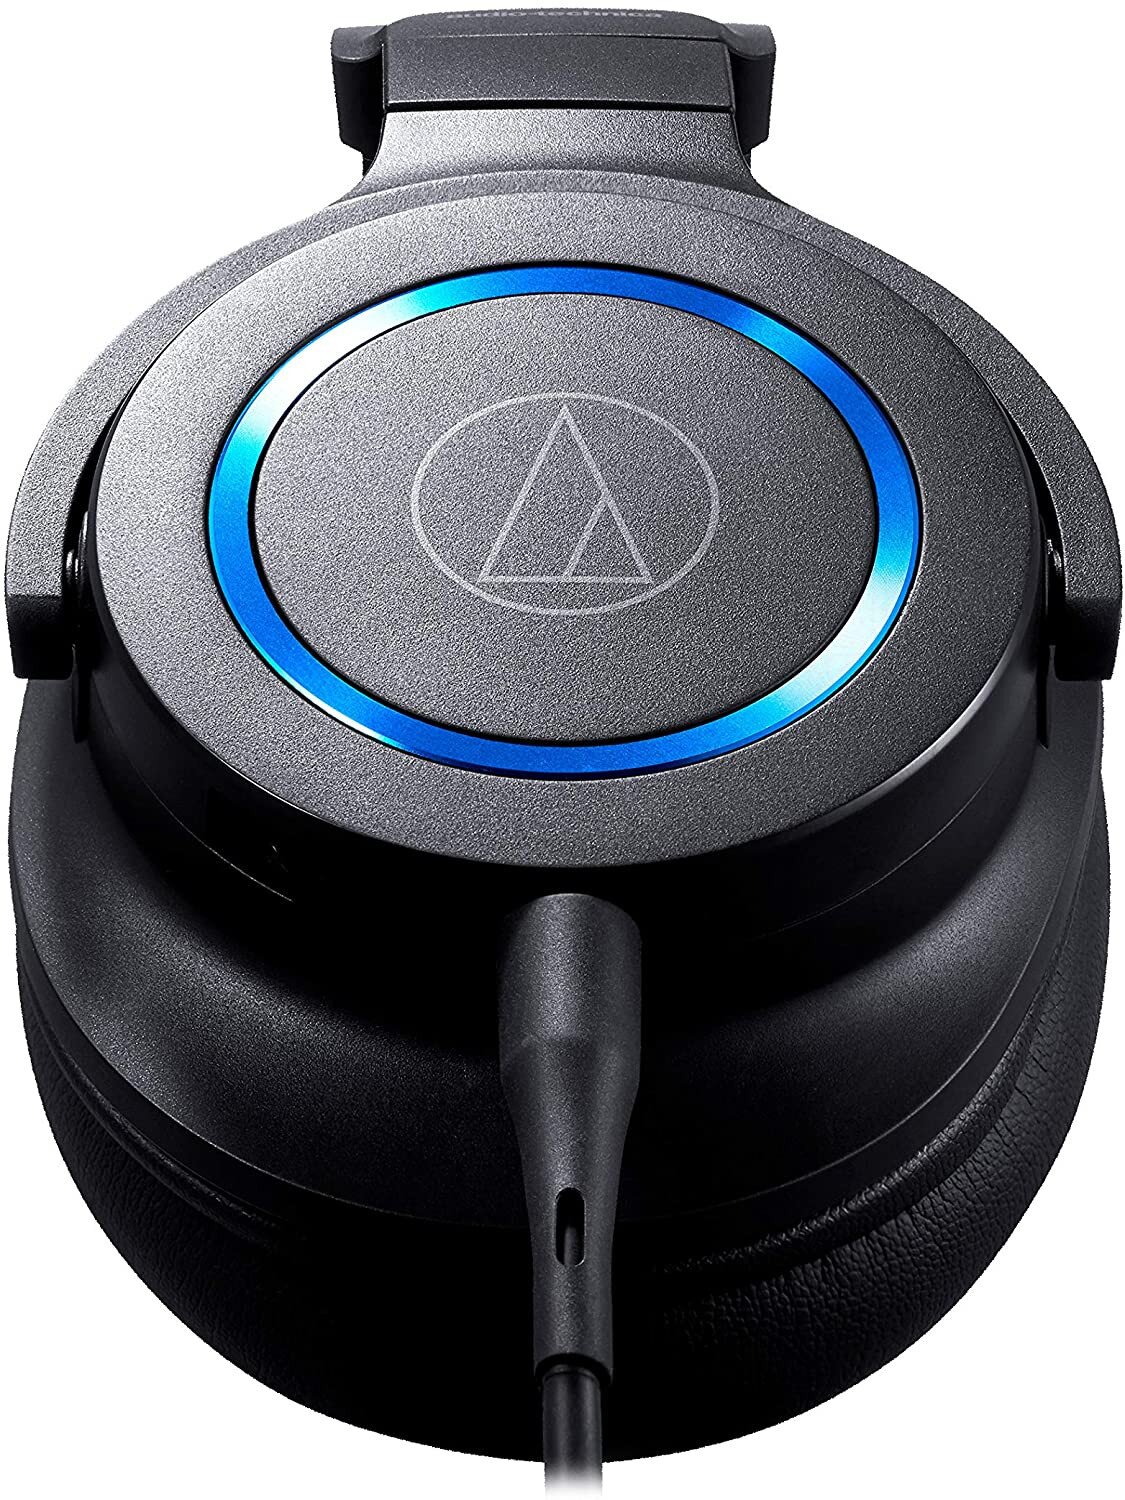 Buy Audio-Technica ATH-G1 Premium Gaming Headset online in Pakistan